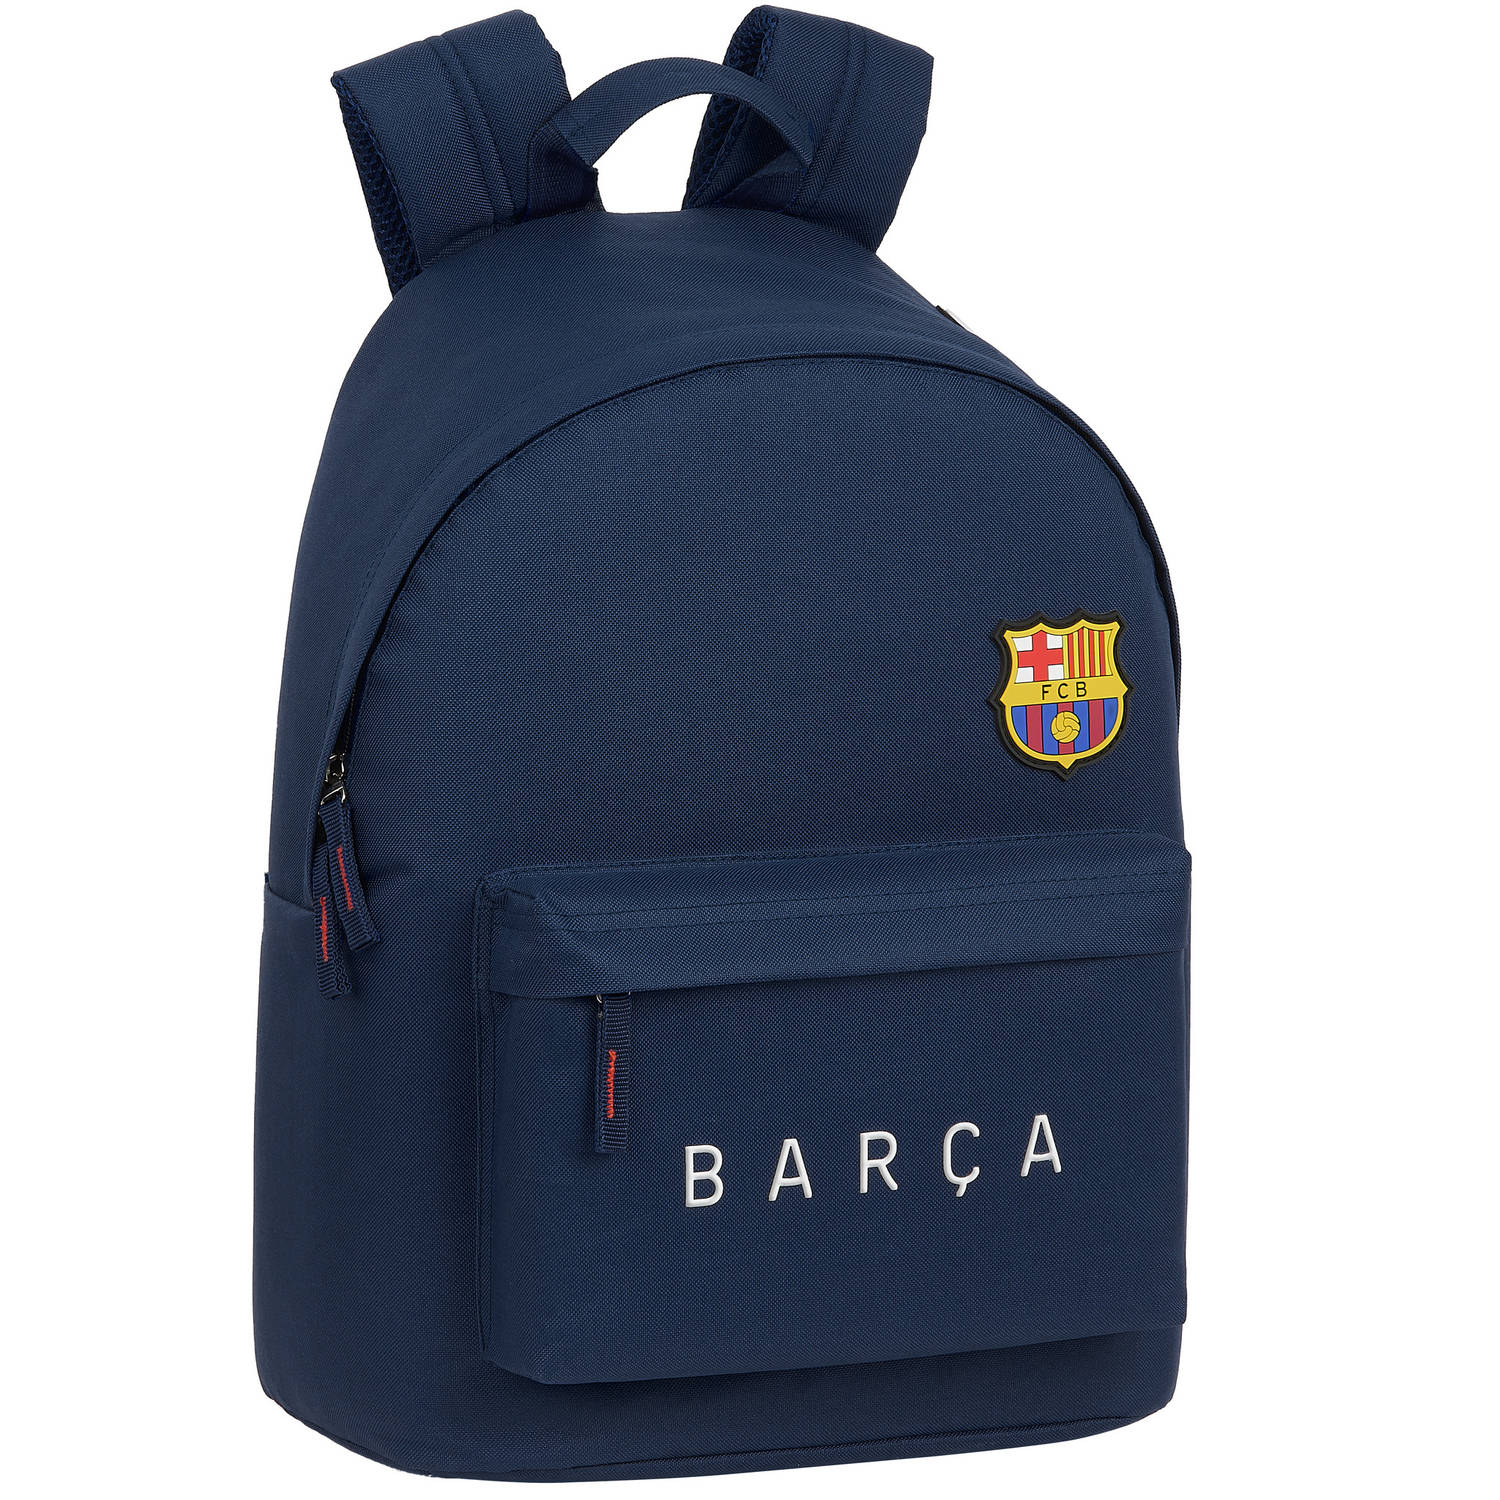 FC Barcelona Laptop Rugzak 14,1"", Barca - 40 x 31 x 16 cm - Polyester